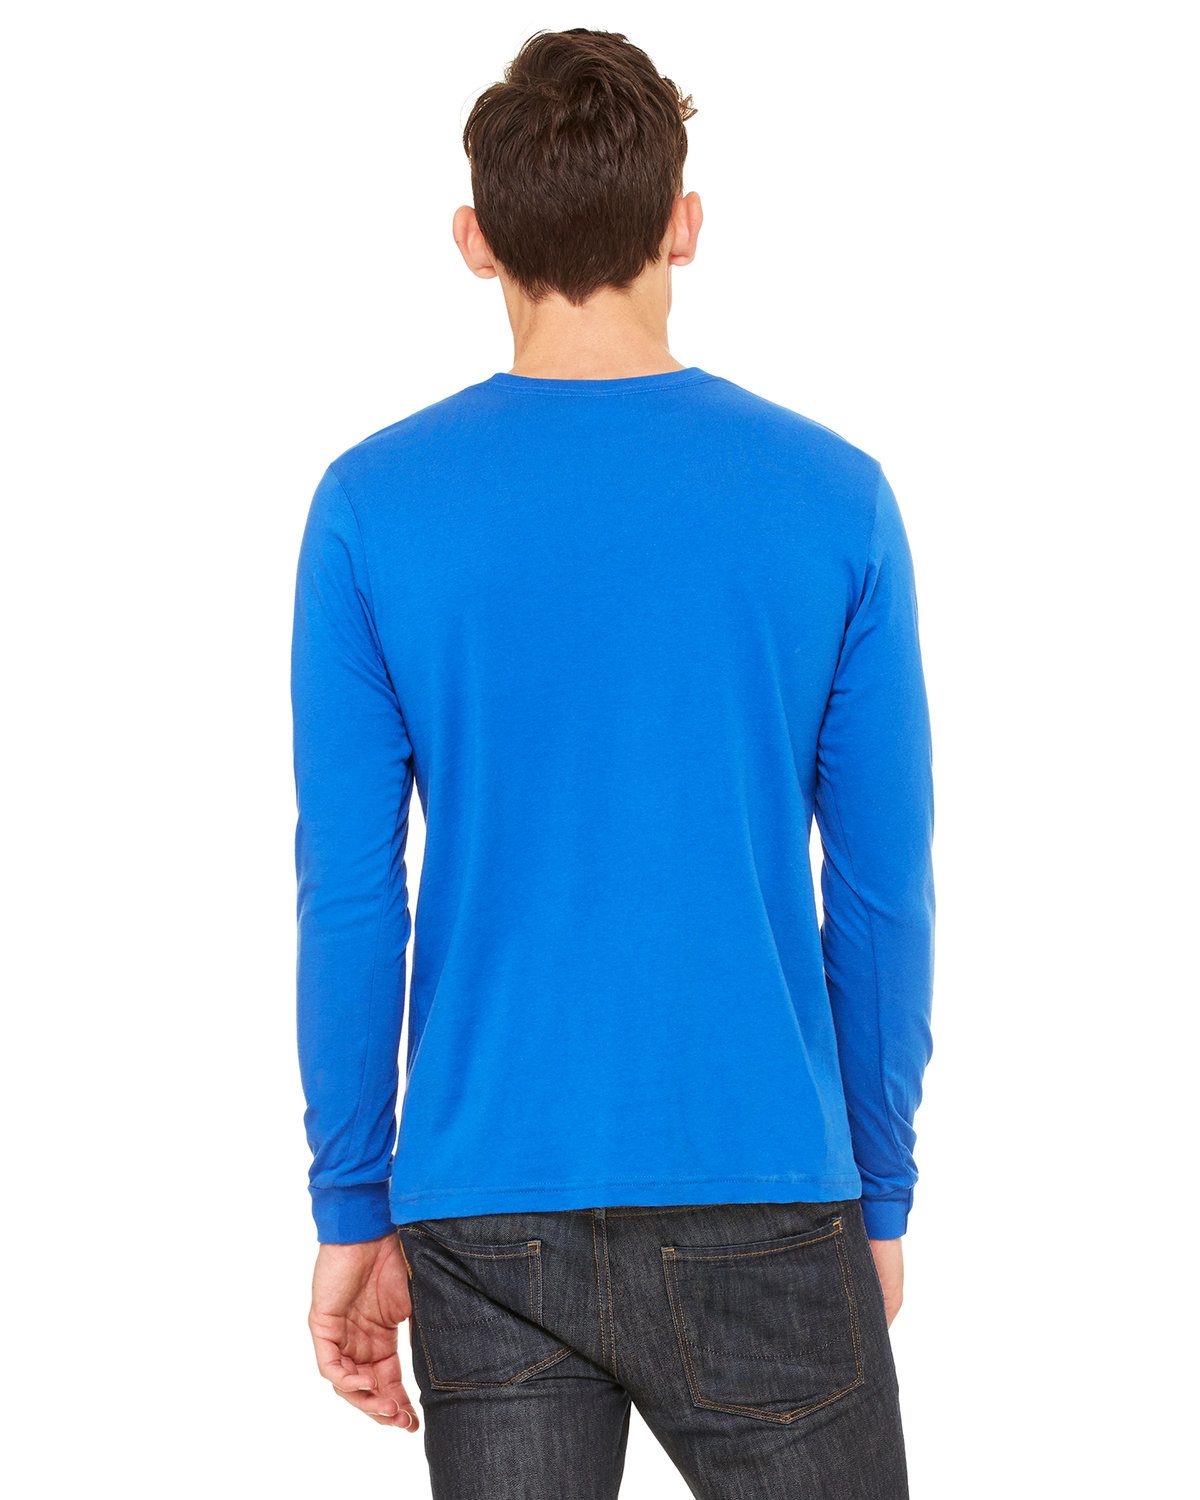 Bella + Canvas Unisex Jersey Long-Sleeve T-Shirt #3501 Royal Blue Back